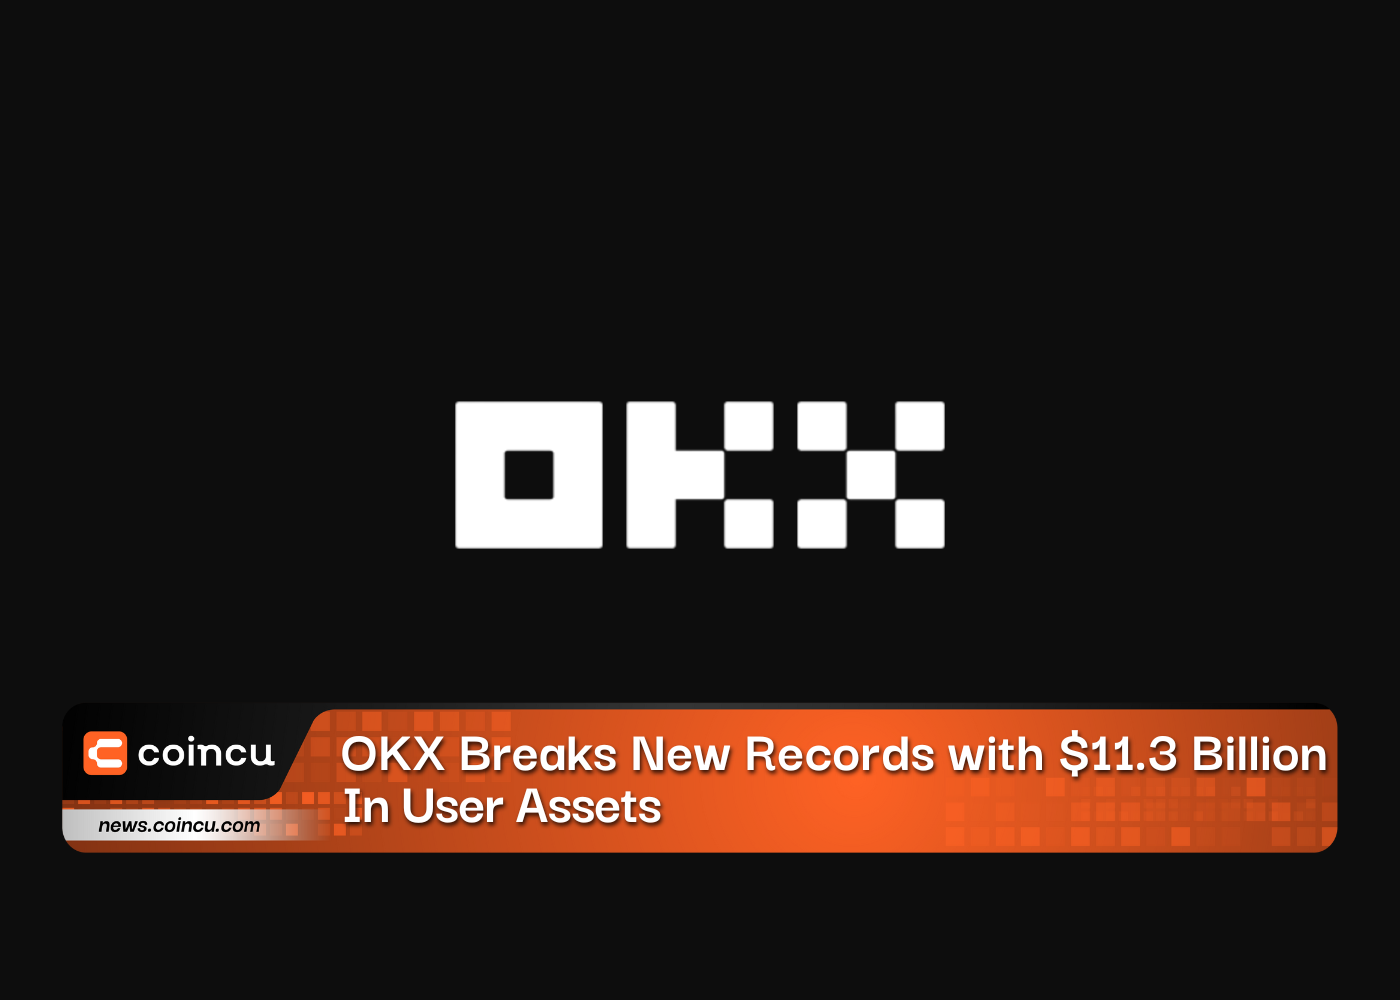 OKX Breaks New Records with 11.3 Billion